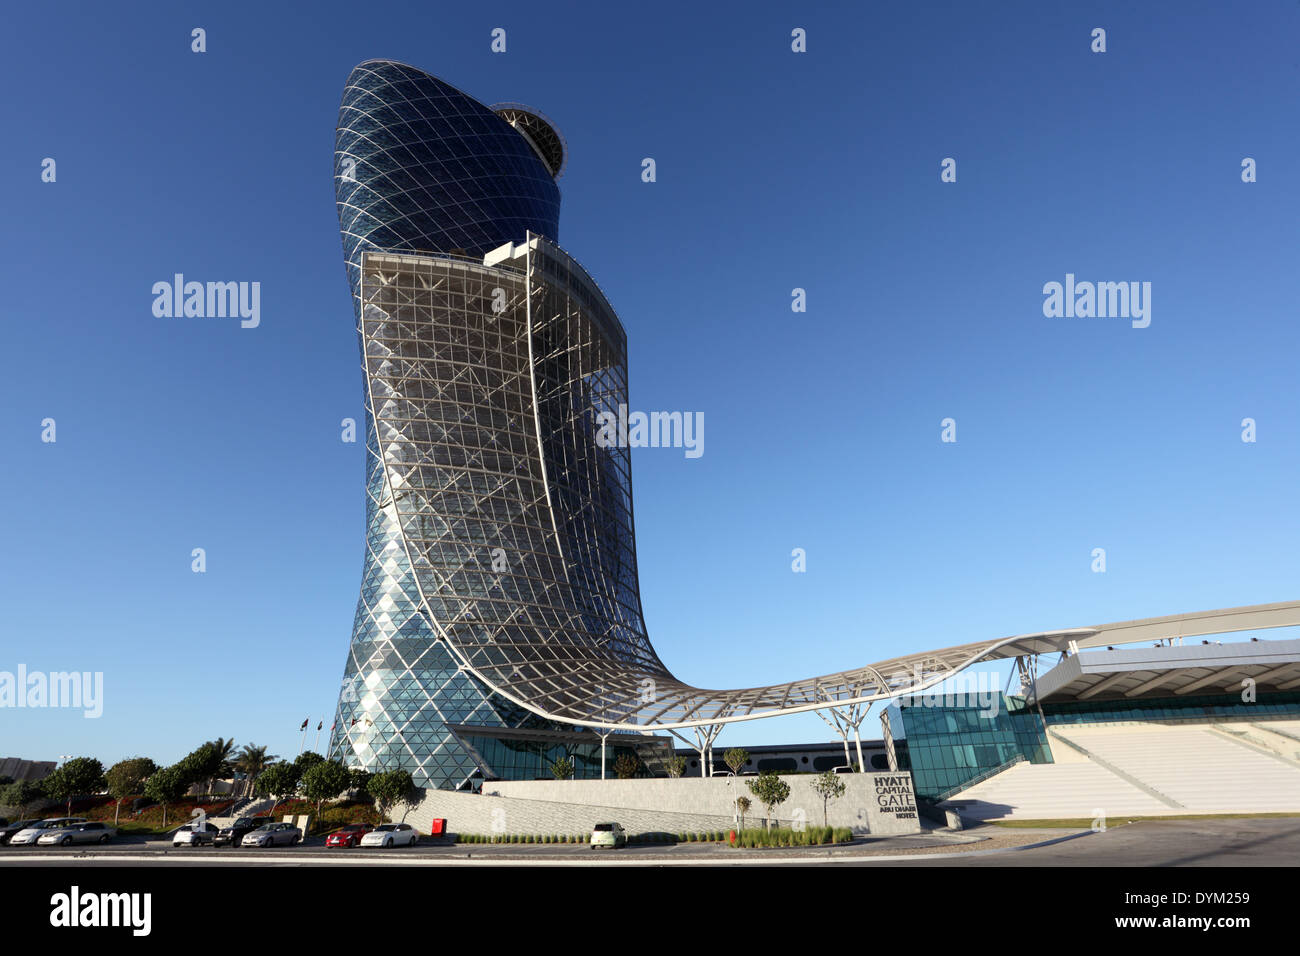 The Capital Gate building in Abu Dhabi, United Arab Emirates Stock Photo